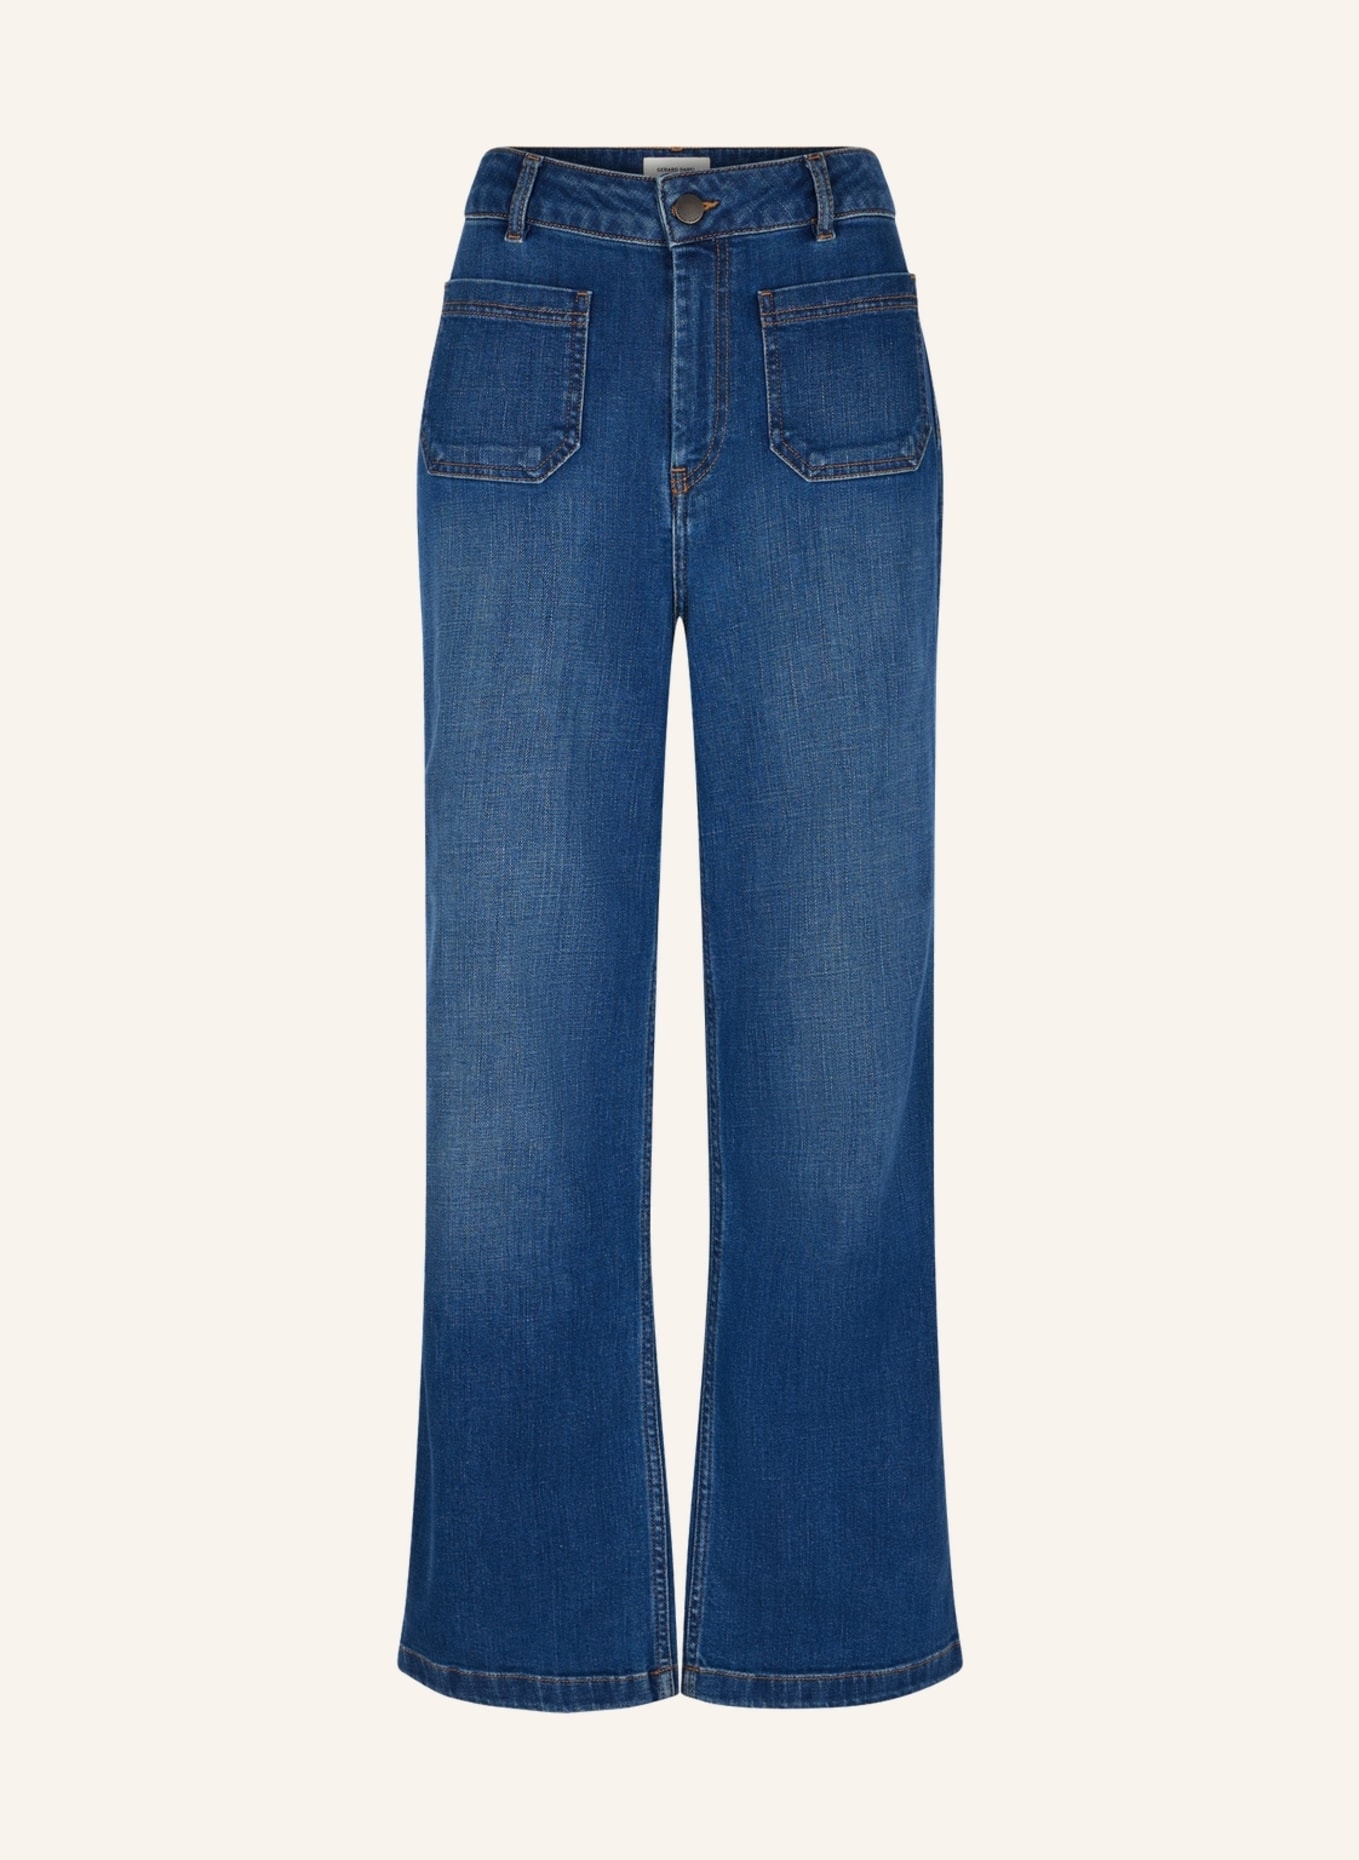 GERARD DAREL Jeans CATALINA, Farbe: BLAU (Bild 1)